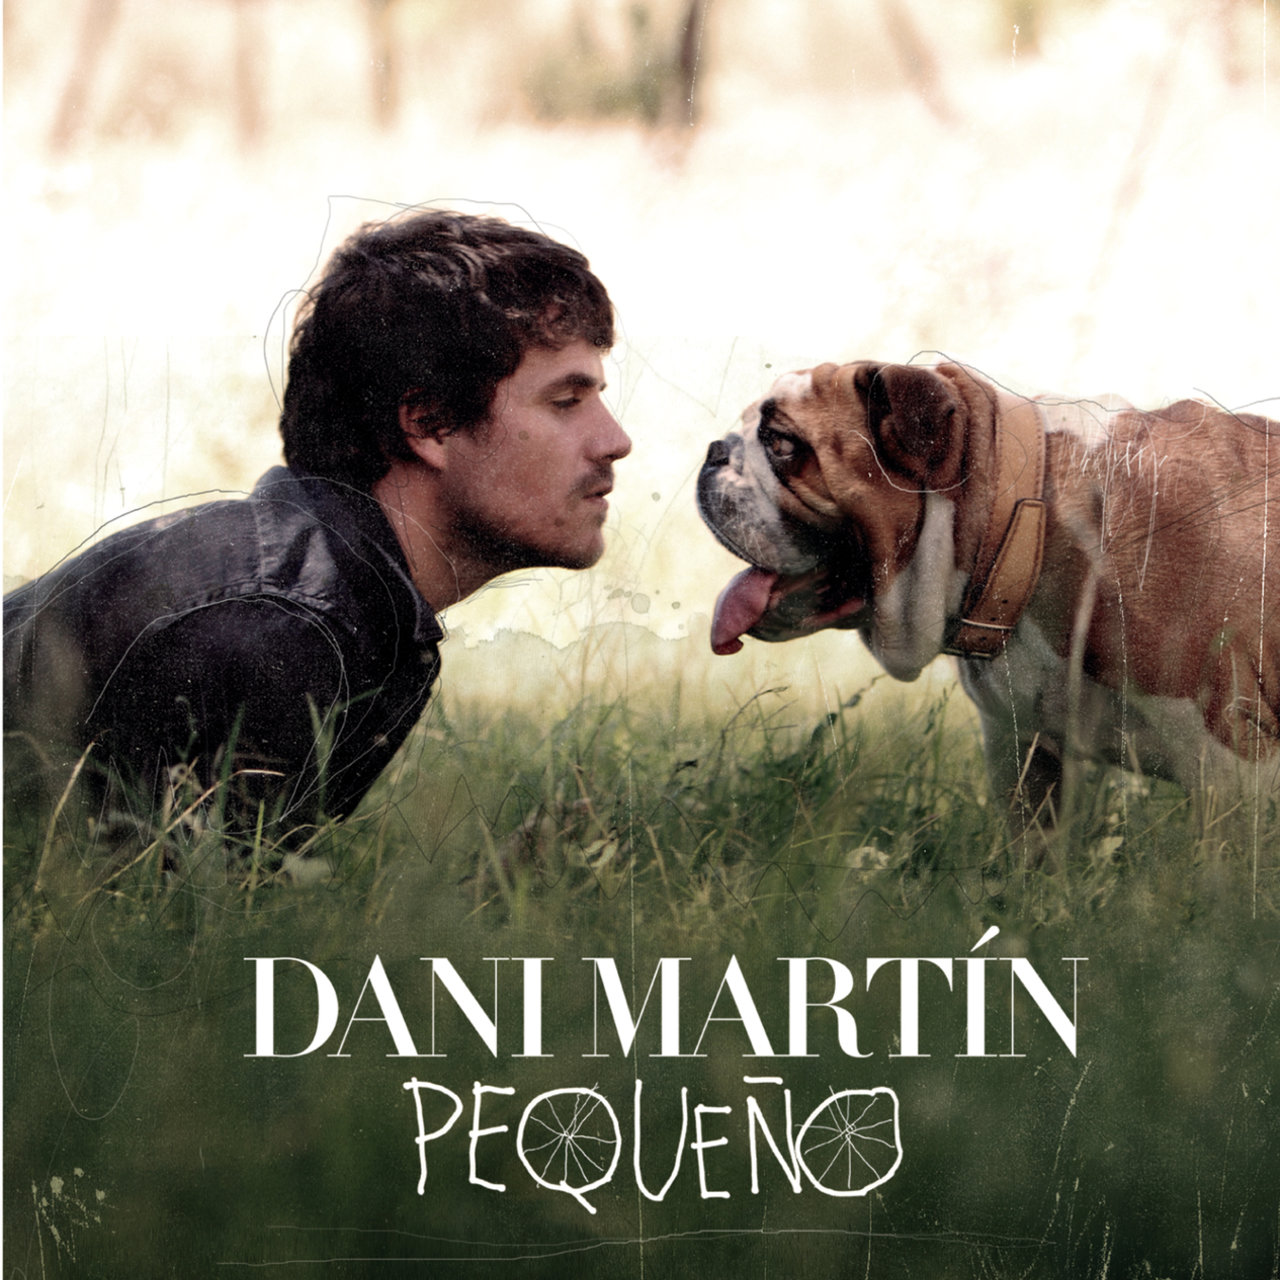 Dani Martín Pequeño cover artwork